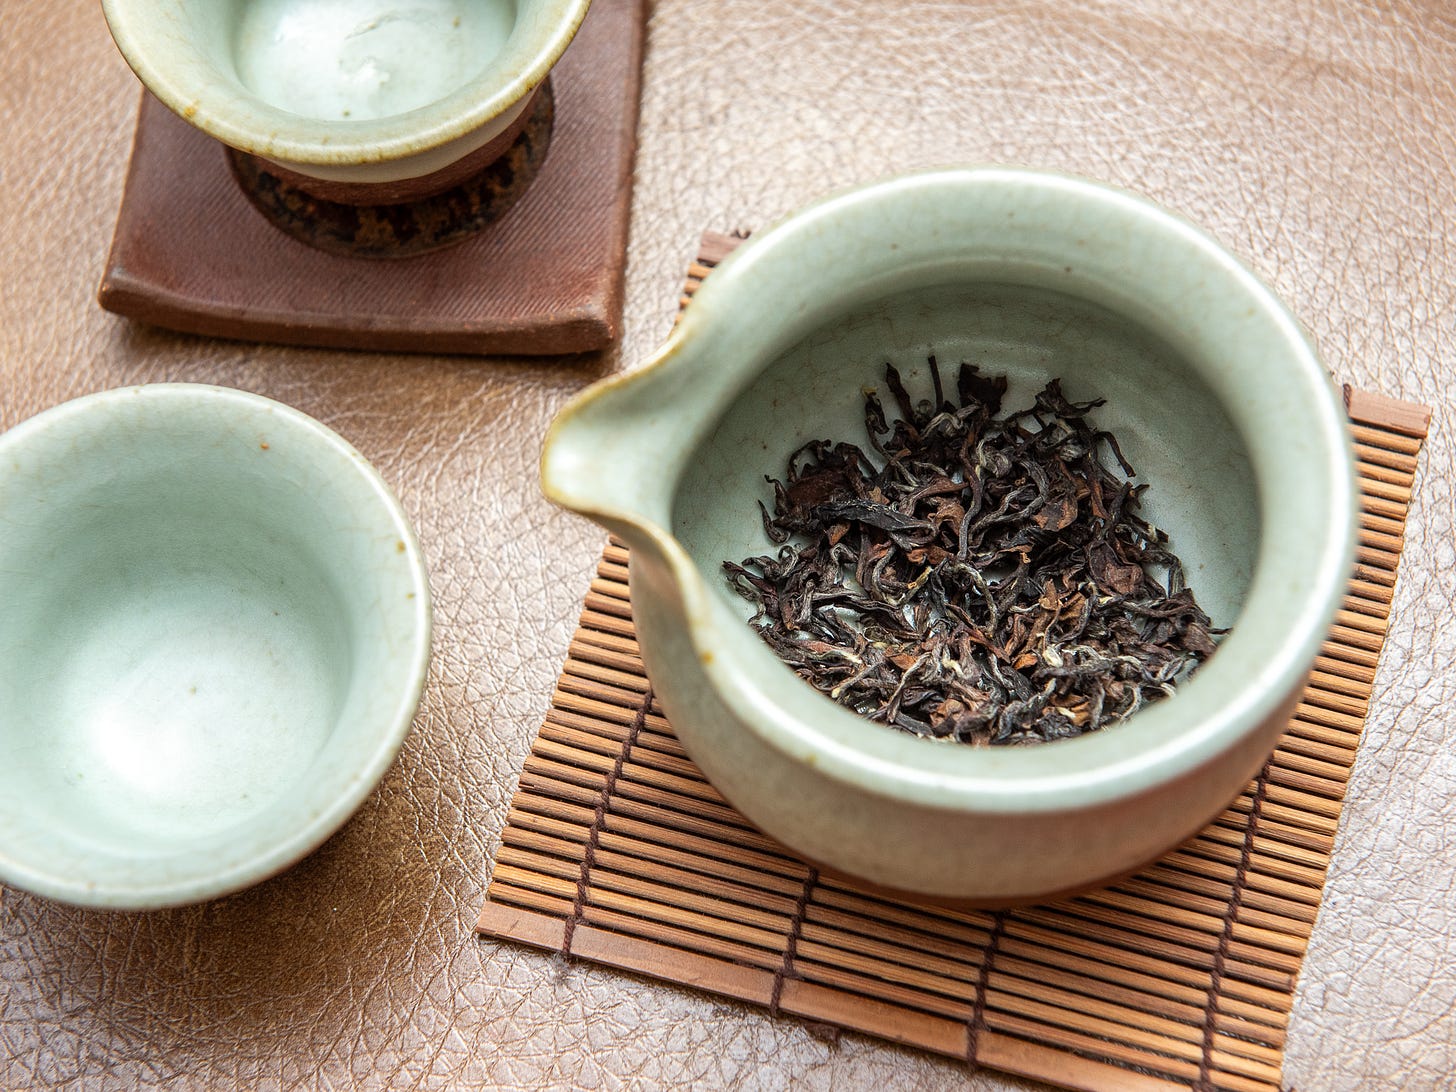 ID: Oriental Beauty oolong tea in ceramic pitcher